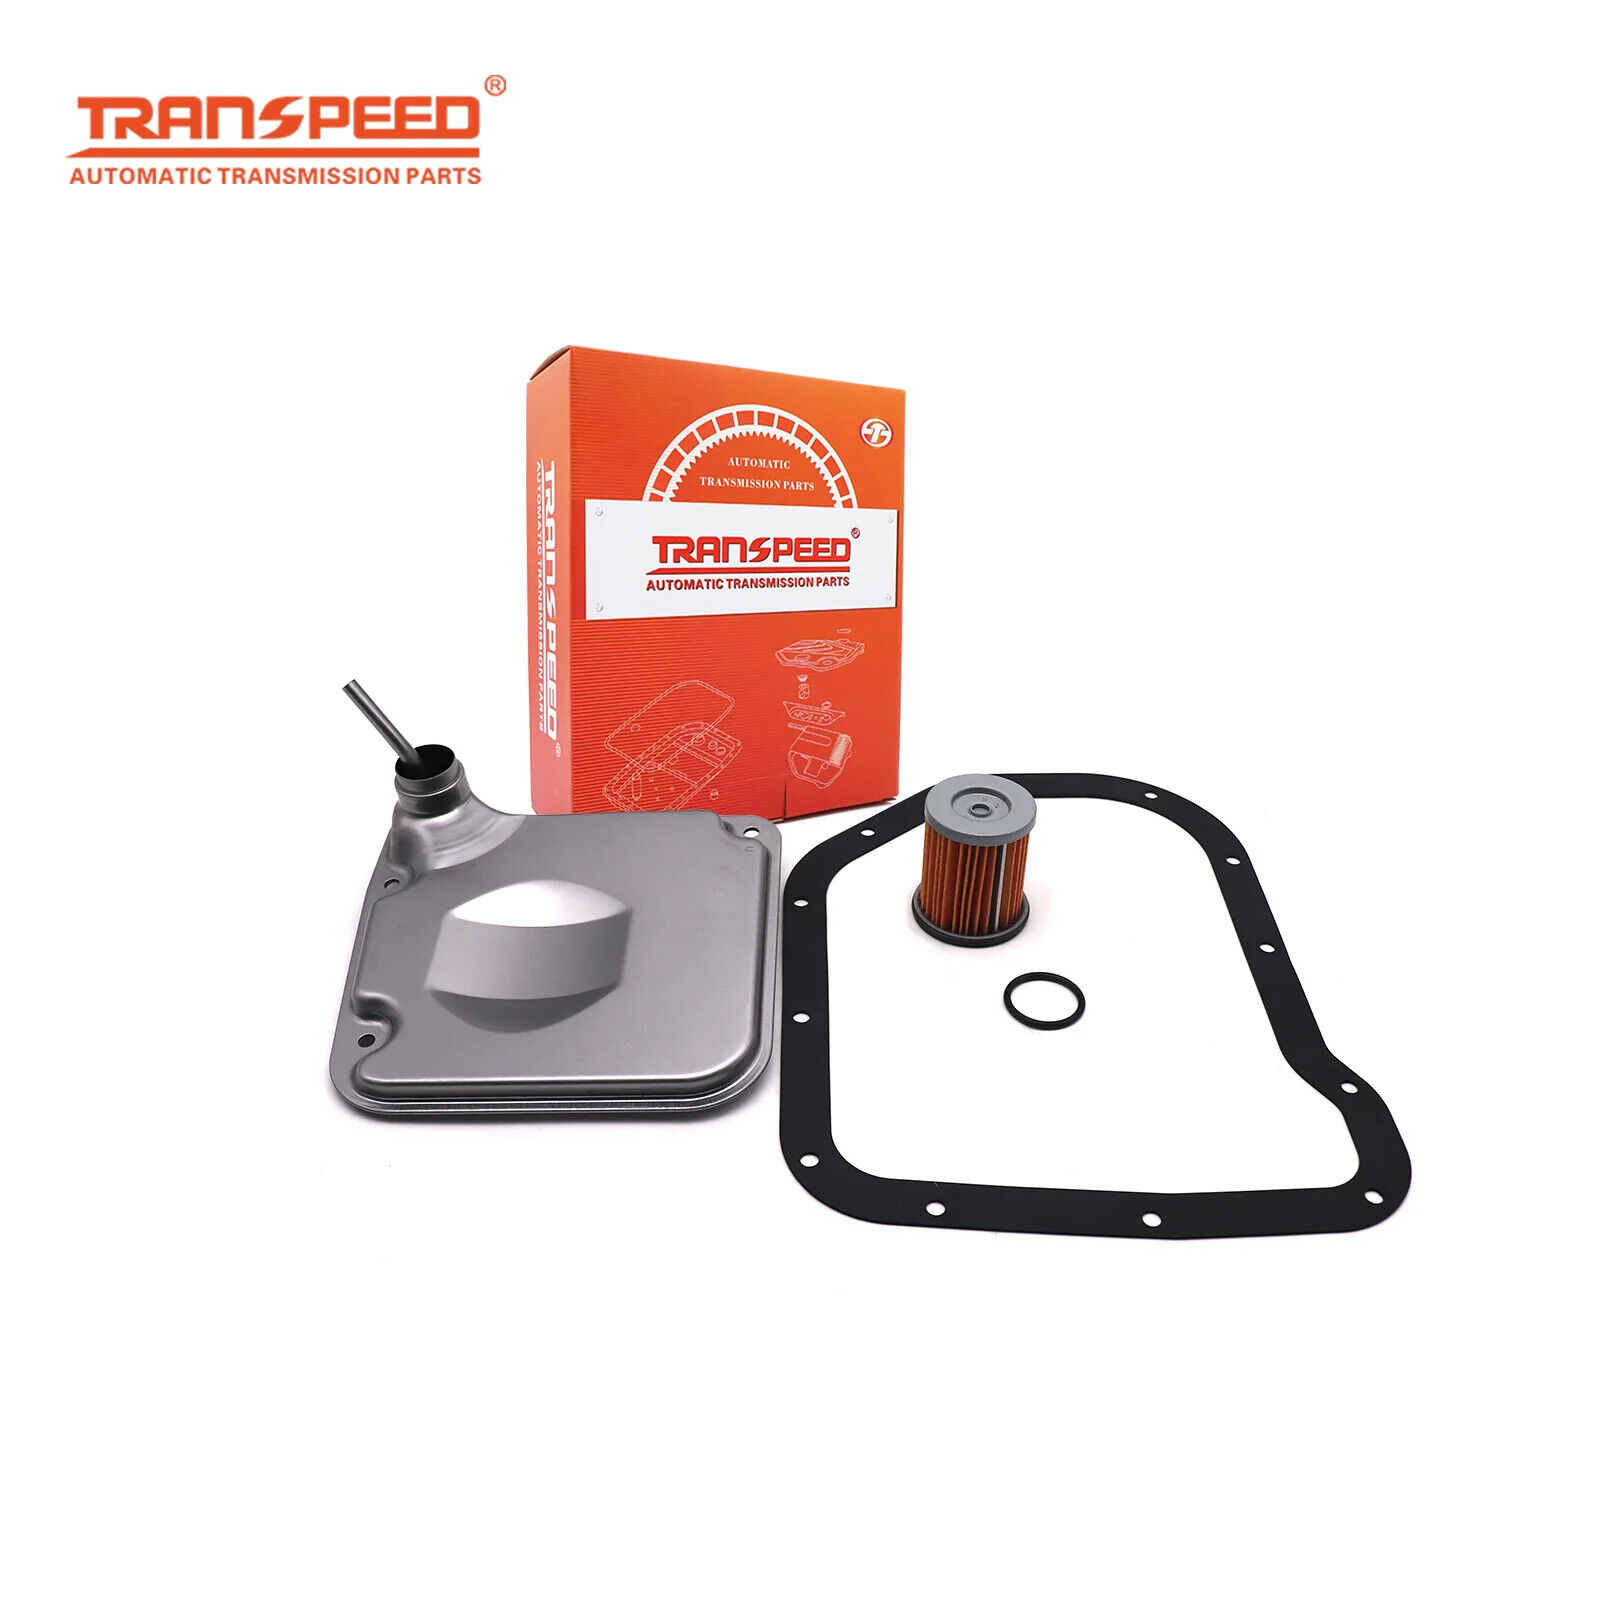 TRANSPEED TR580 Auto Transmission Oil Pan Gasket Oil Filter For Subaru 2.0L 2.5L